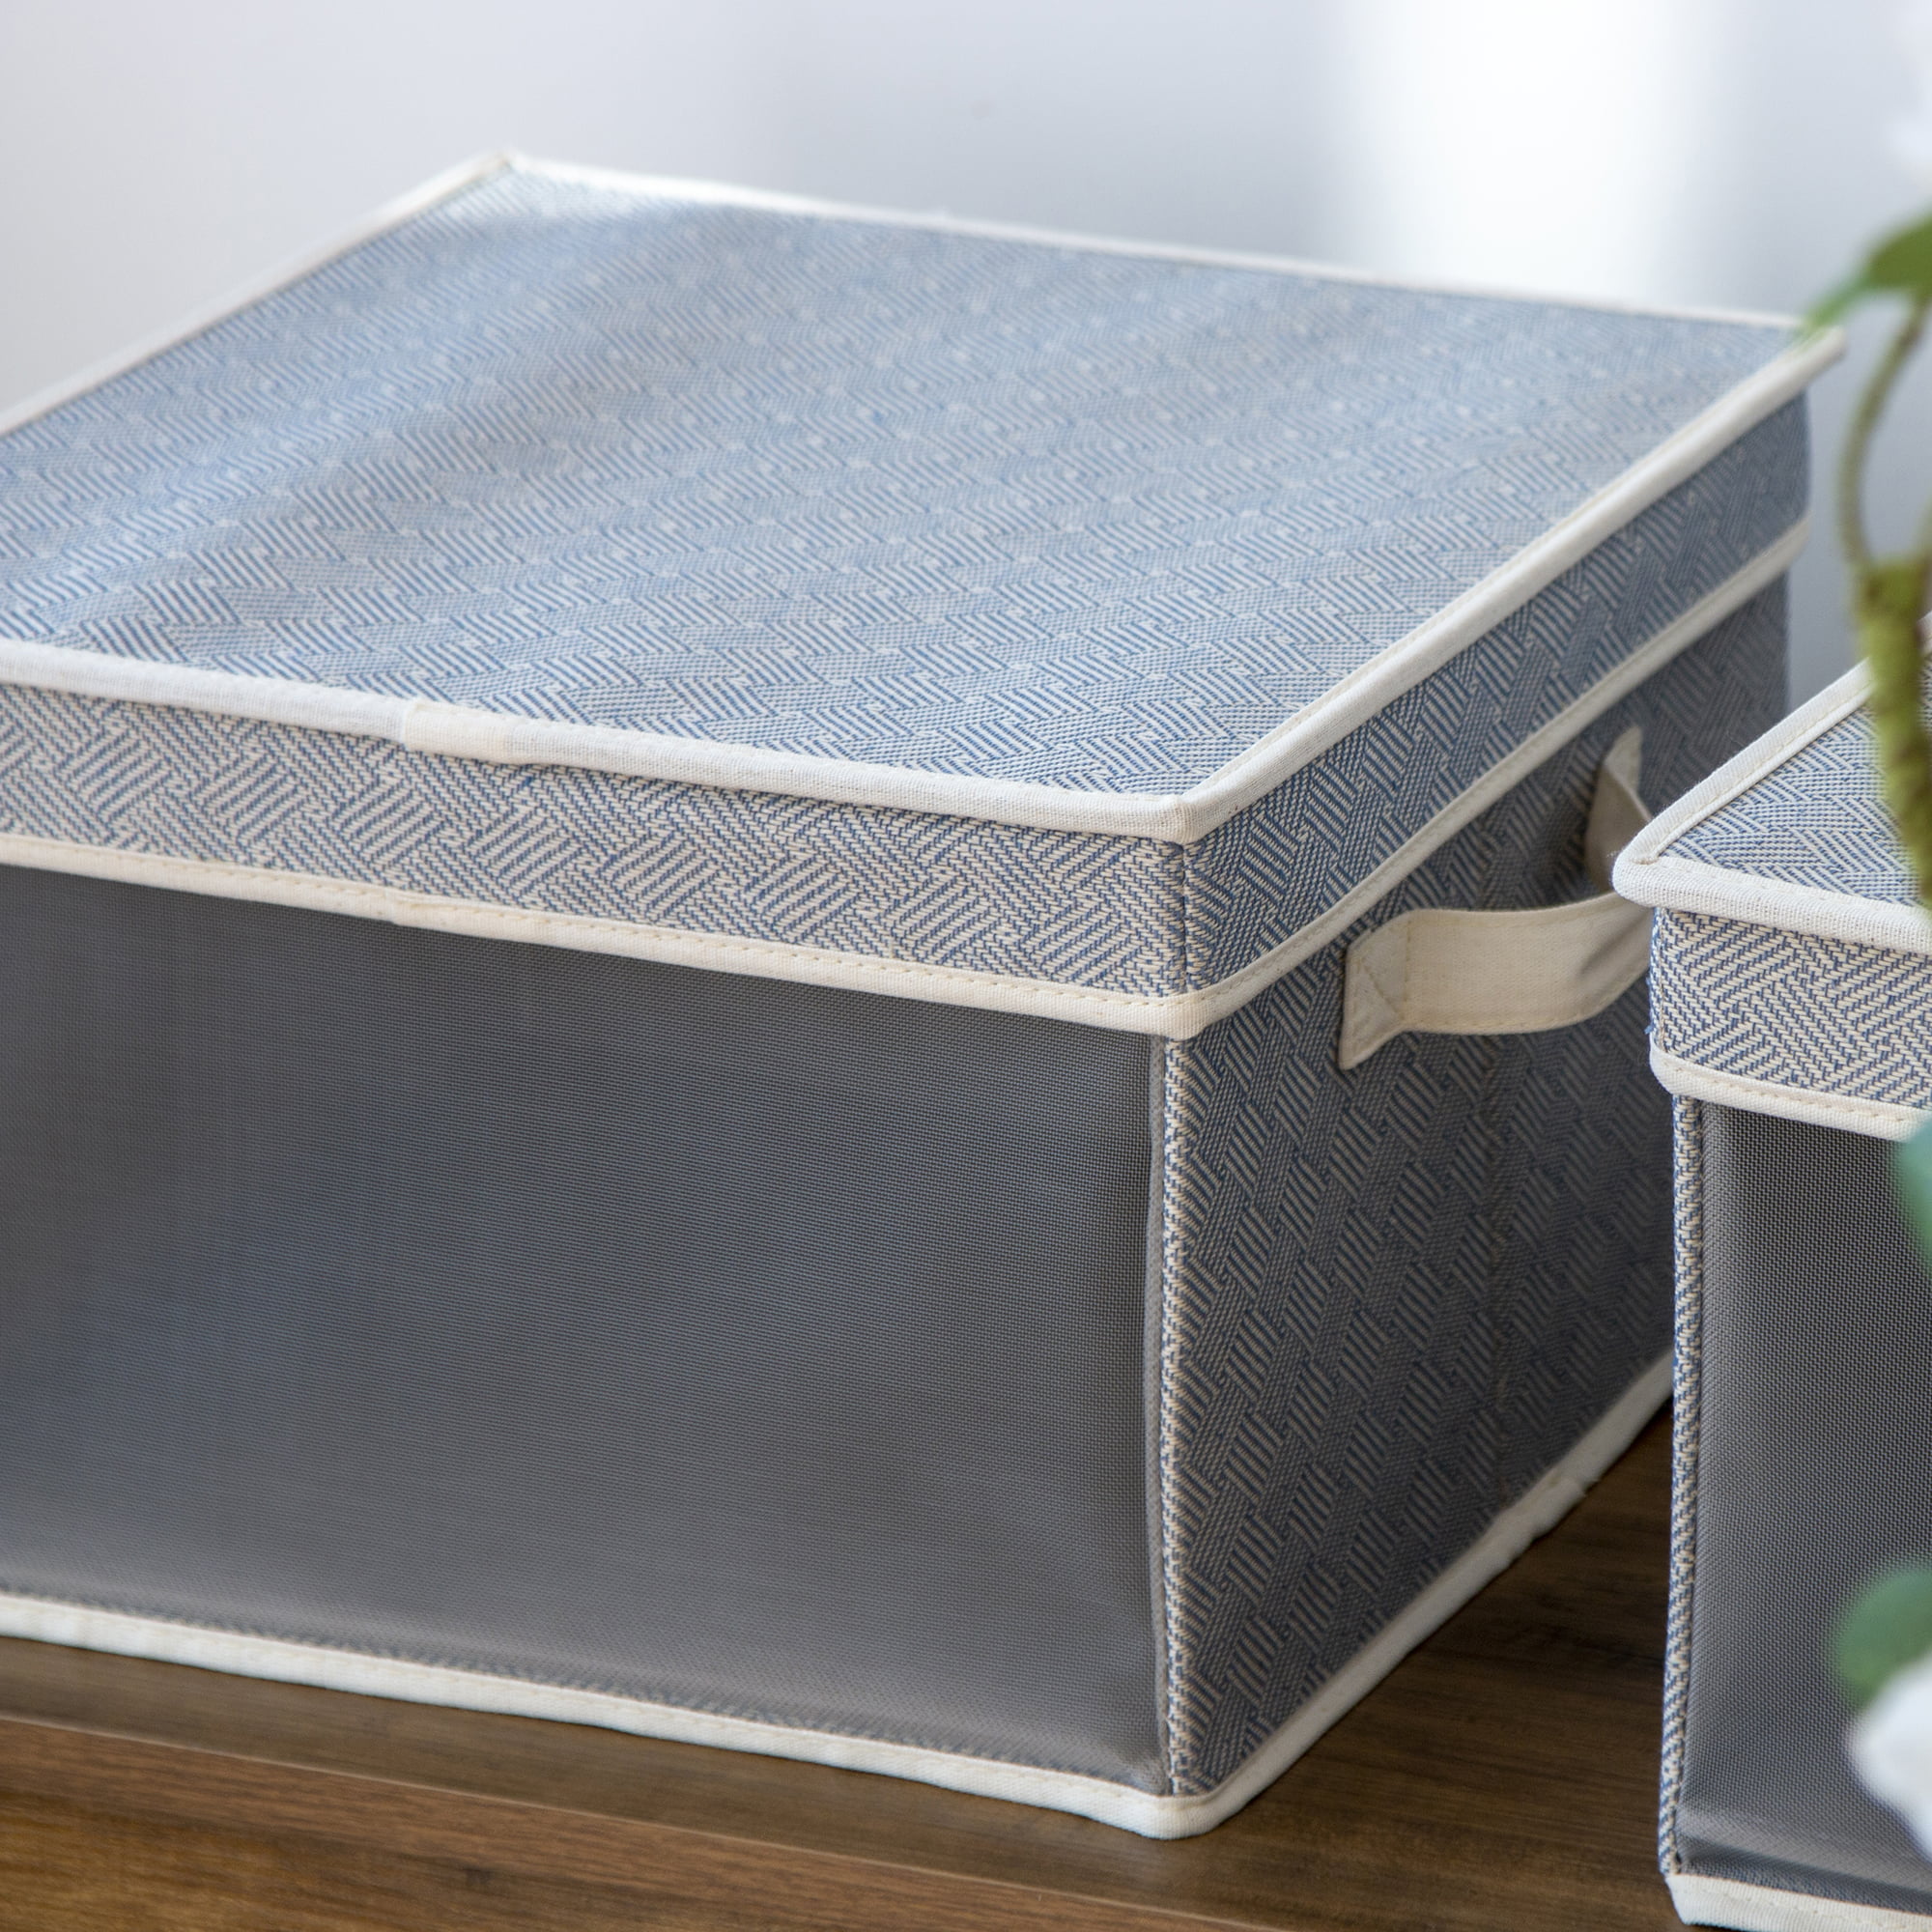 Foldable Fabric Storage Bins with Window, White, 3-Pack – STORAGEWORKS